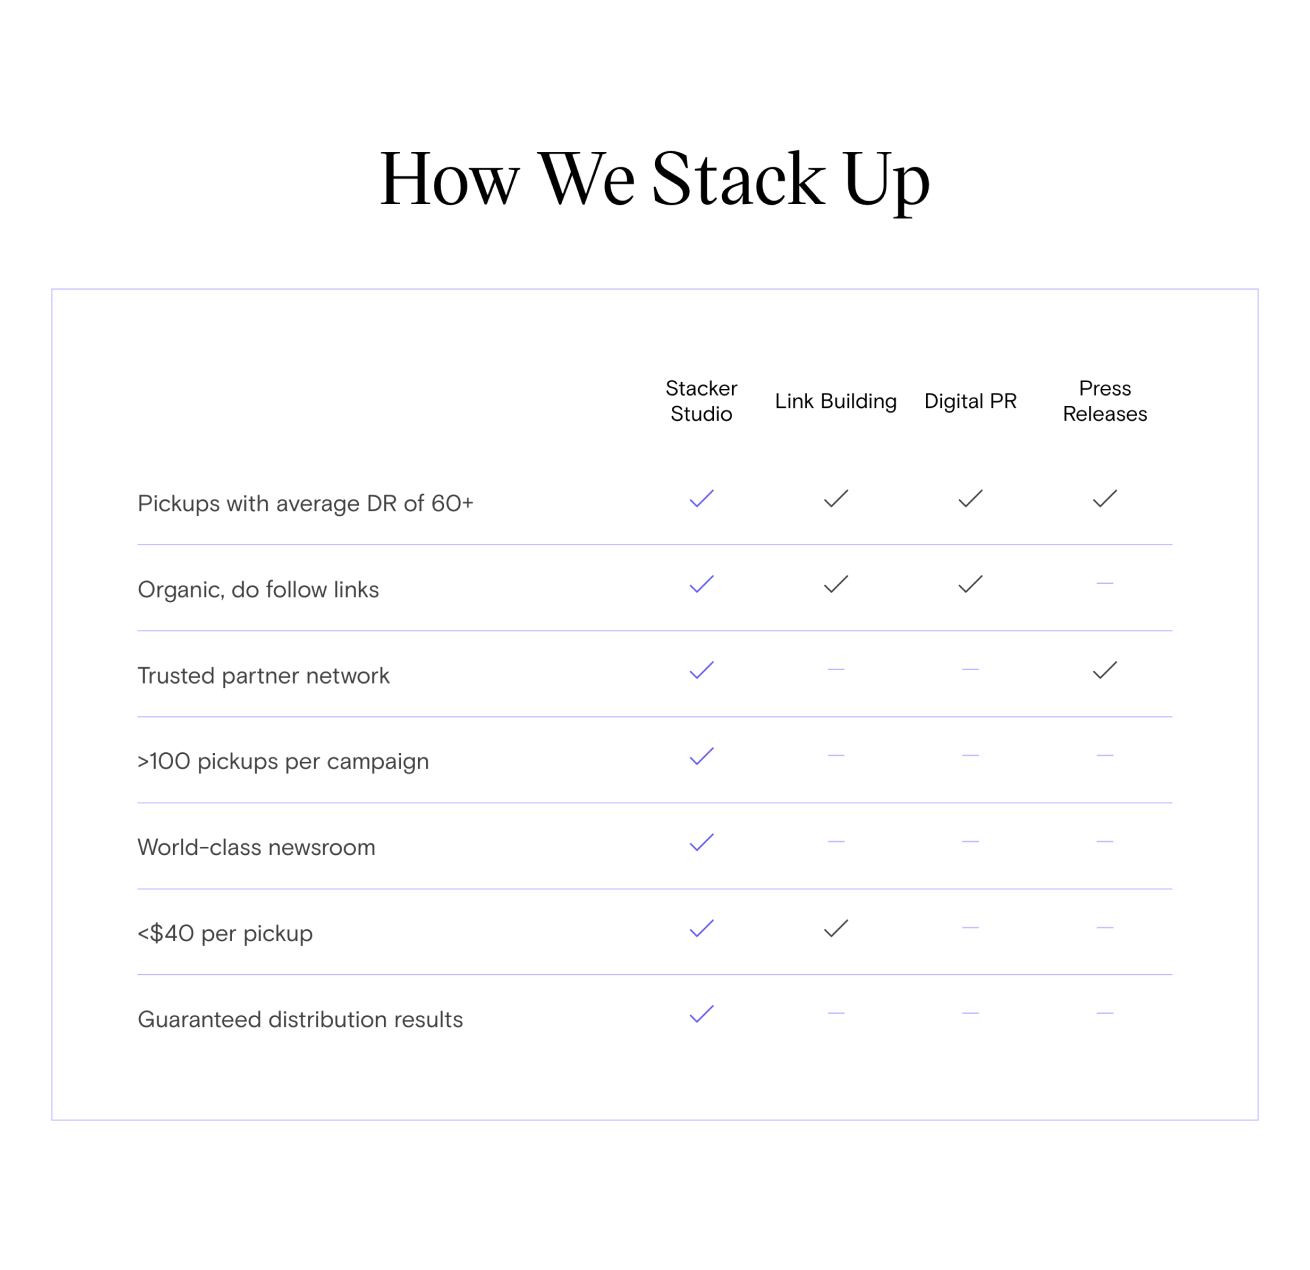 Convenient Comparison Chart on Stacker Studio's Website